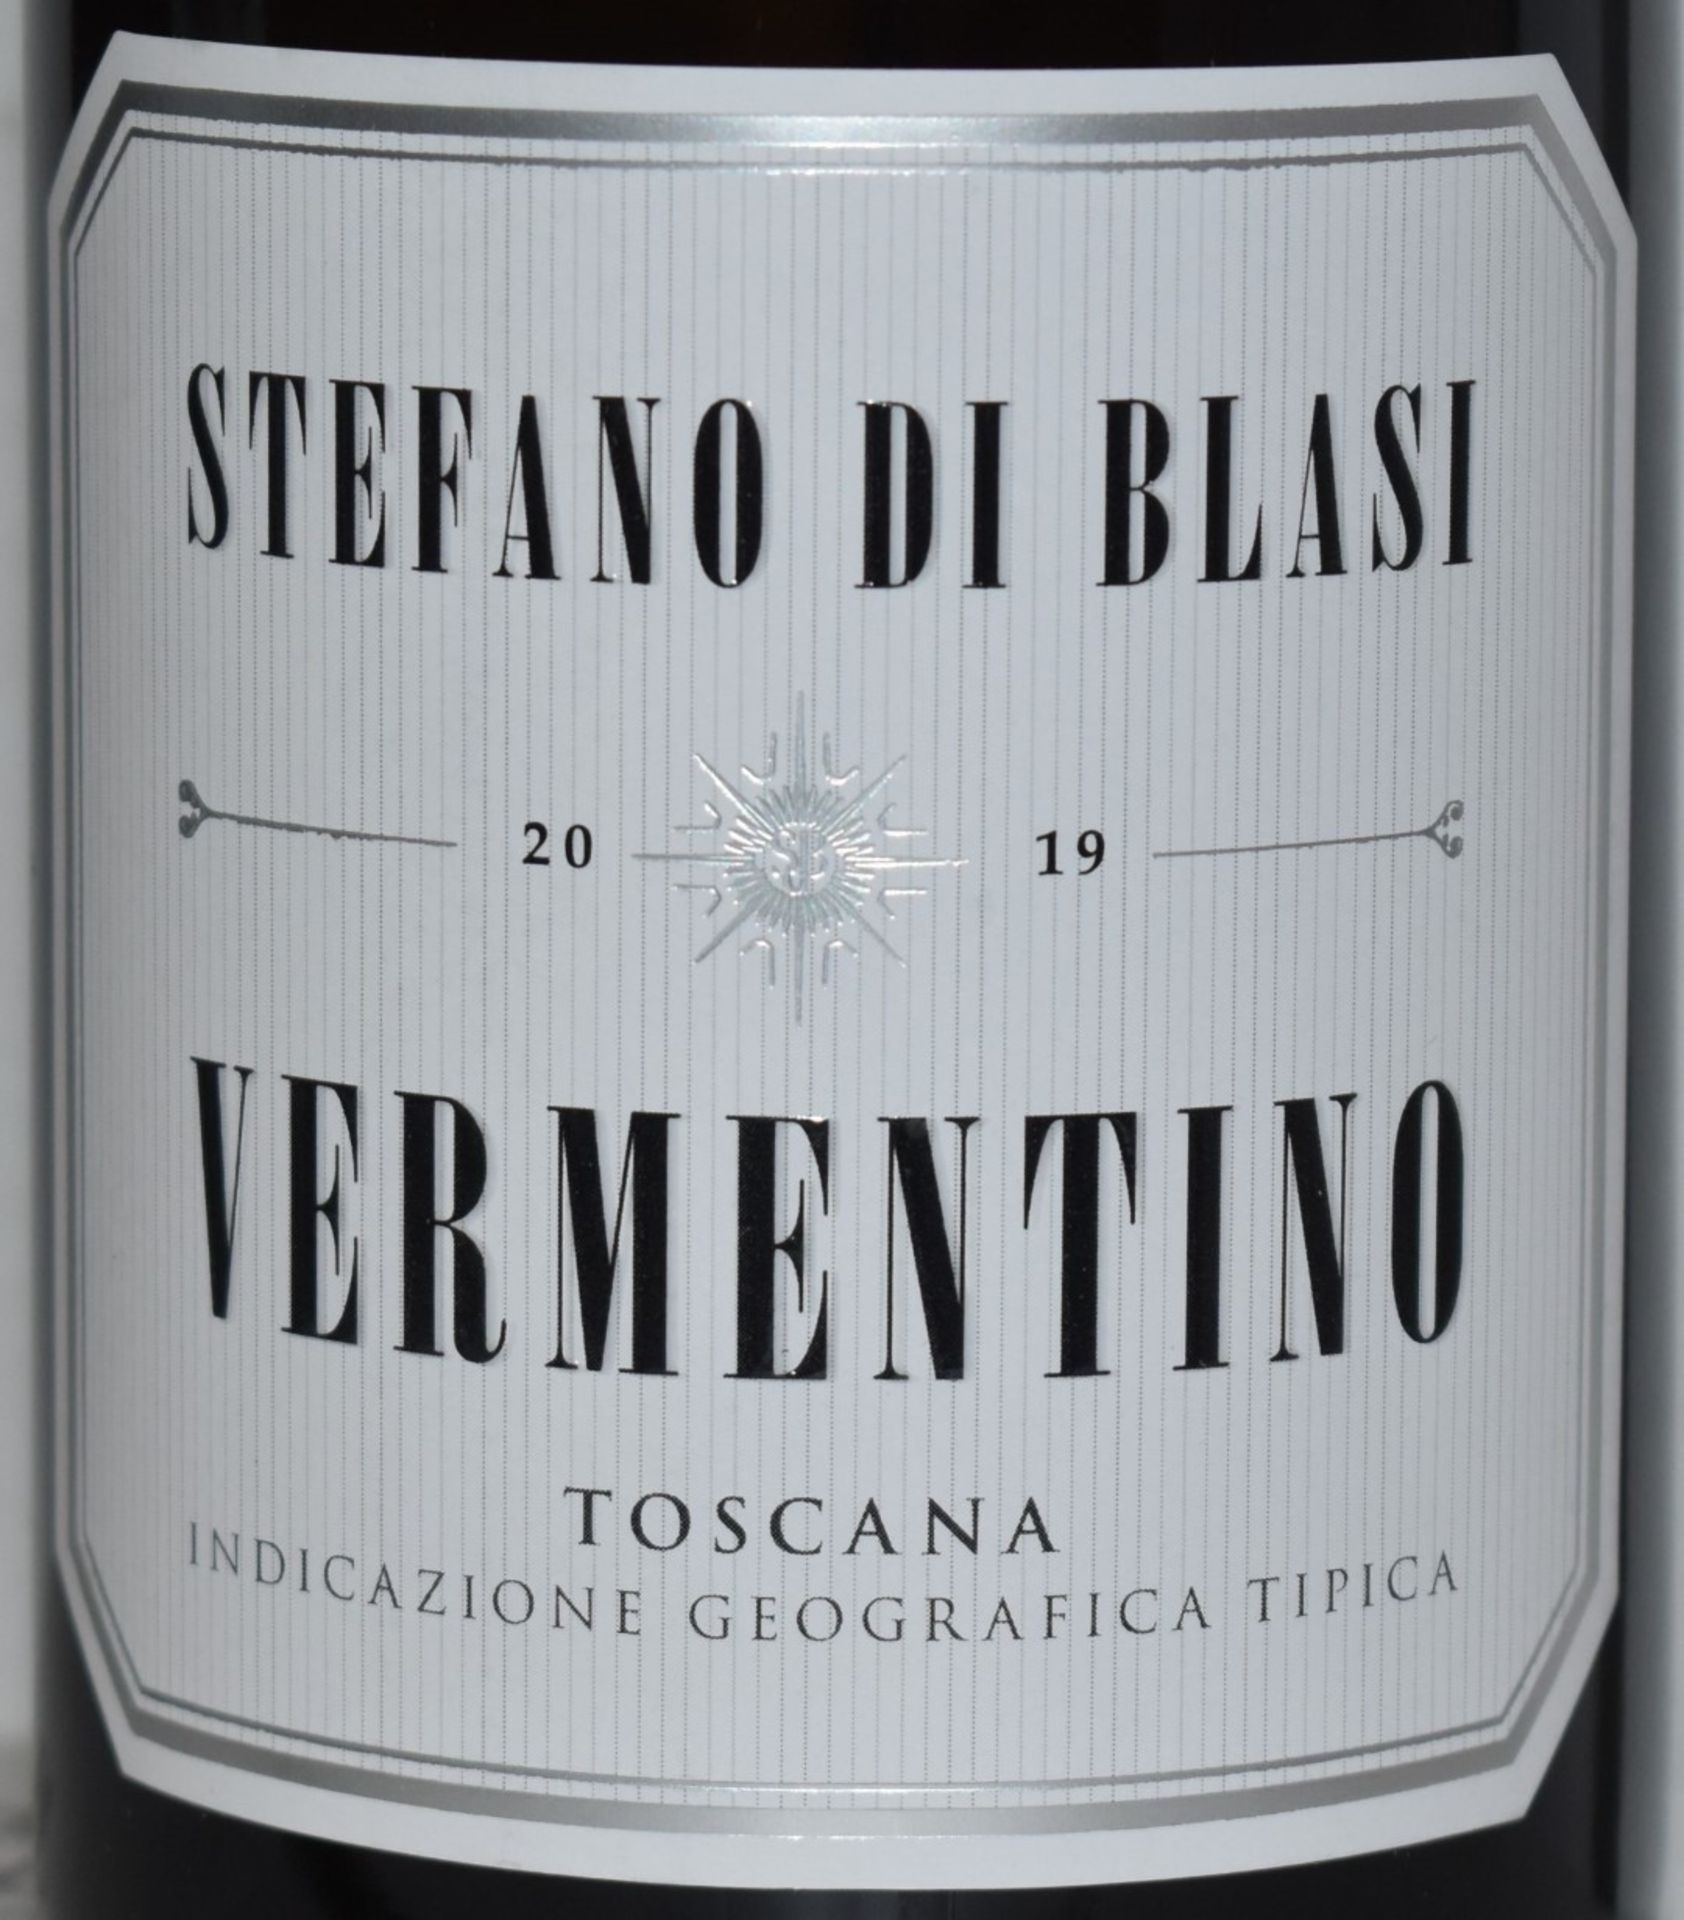 12 x Bottles of Stefano Di Blasi 2019 Vermentino Toscana 13.5% Wine - 750ml Bottles - Drink Until - Image 4 of 7